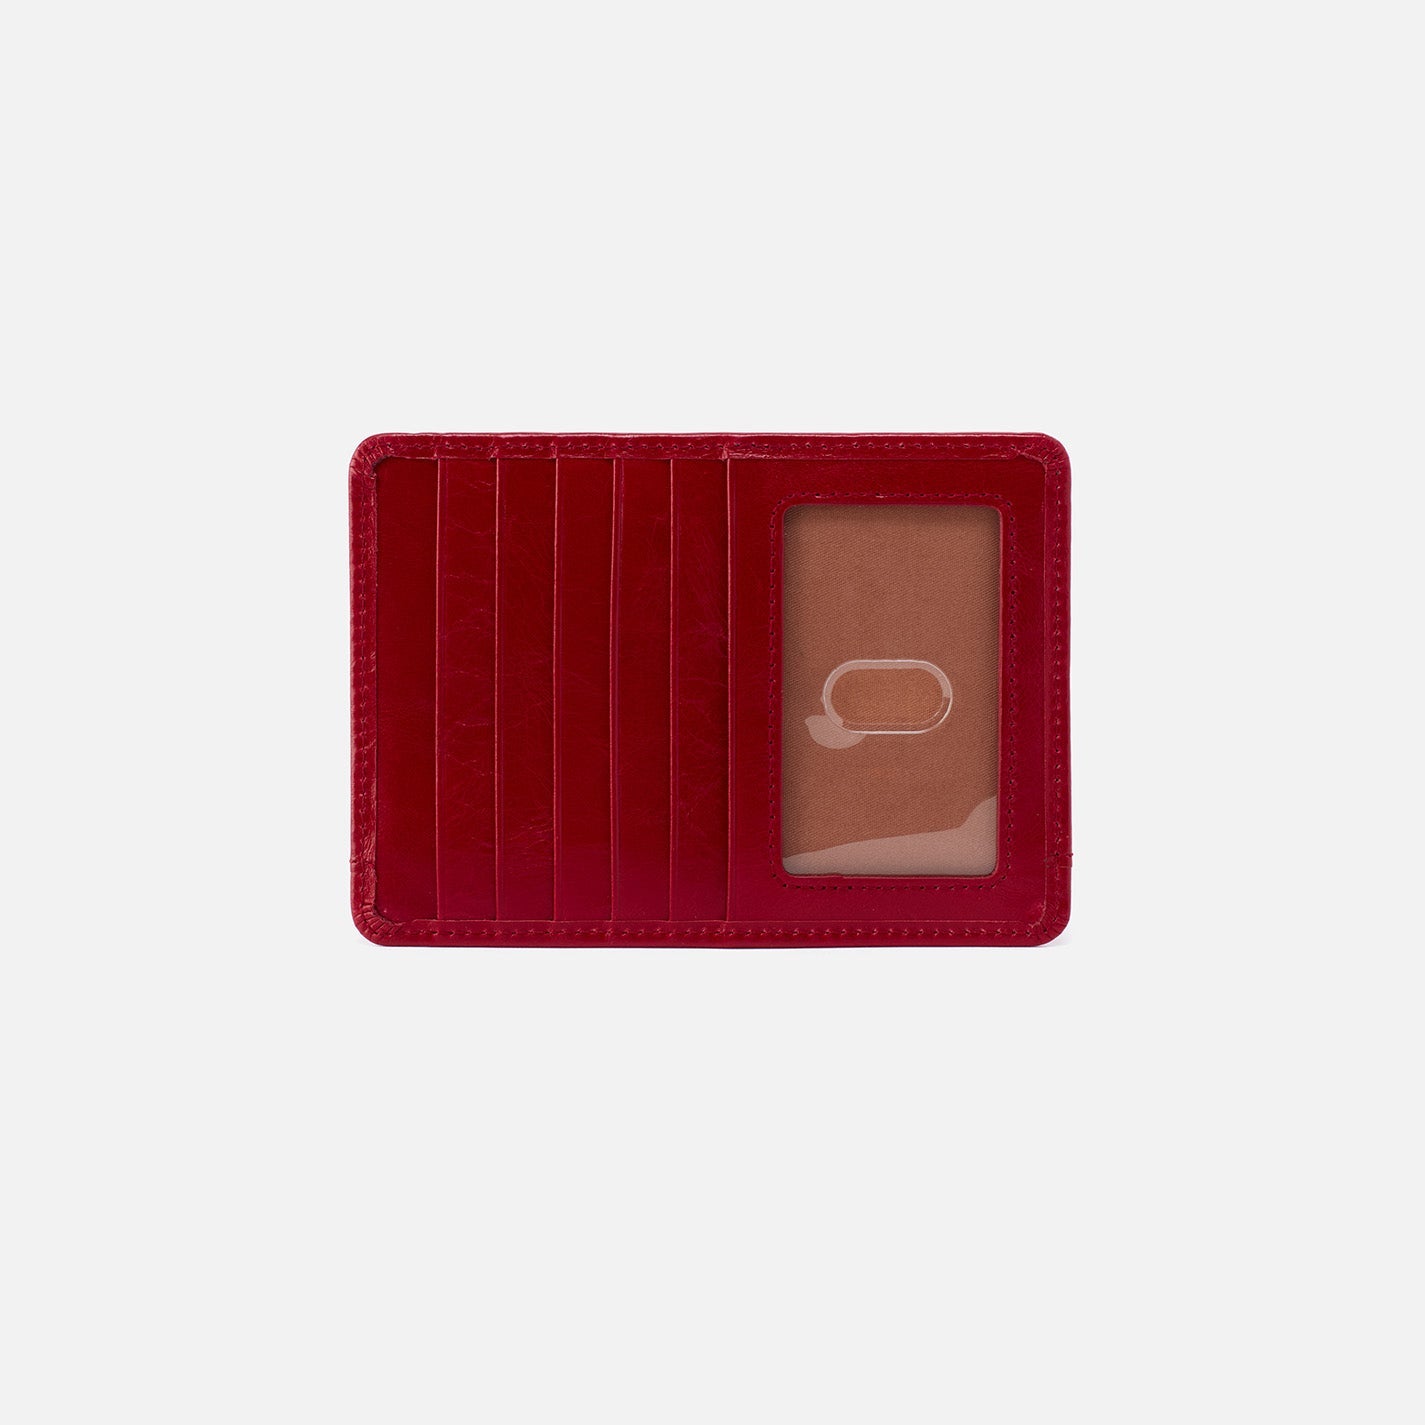 Hobo Bags “Euro” Slide - Crimson